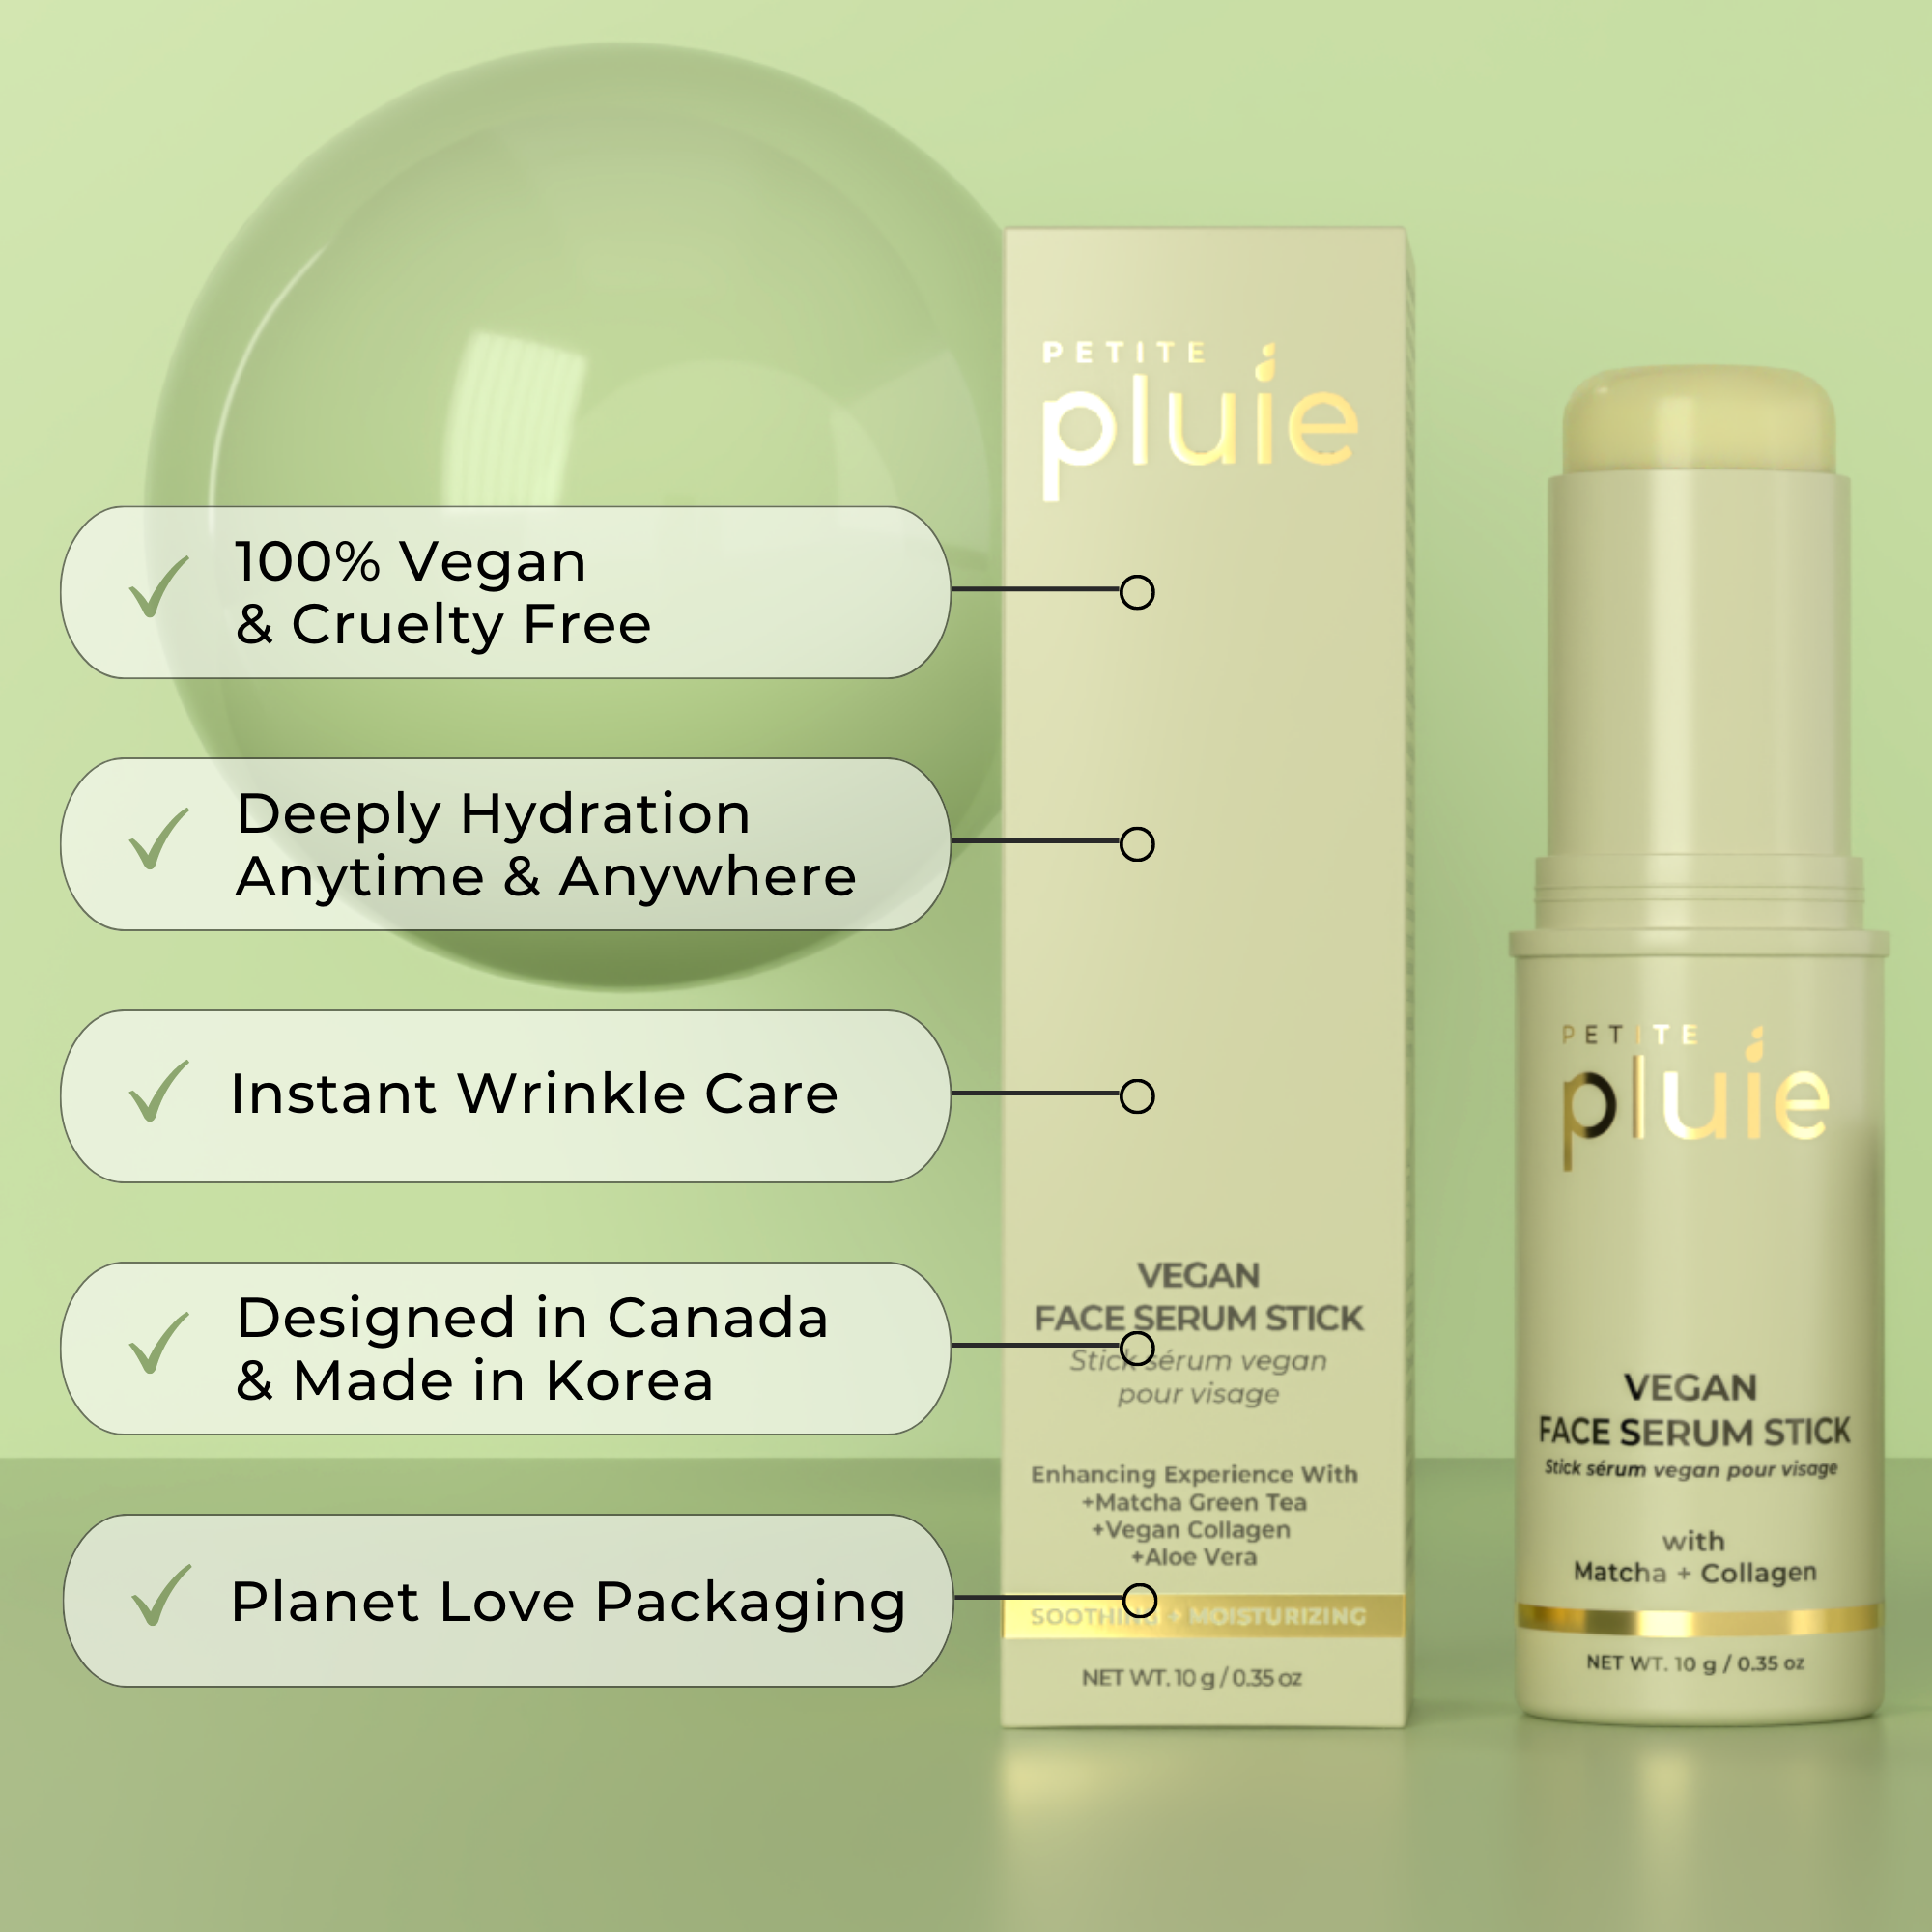 vegan face serum stick for hydration and moisturizing Petite pluie k-beauty